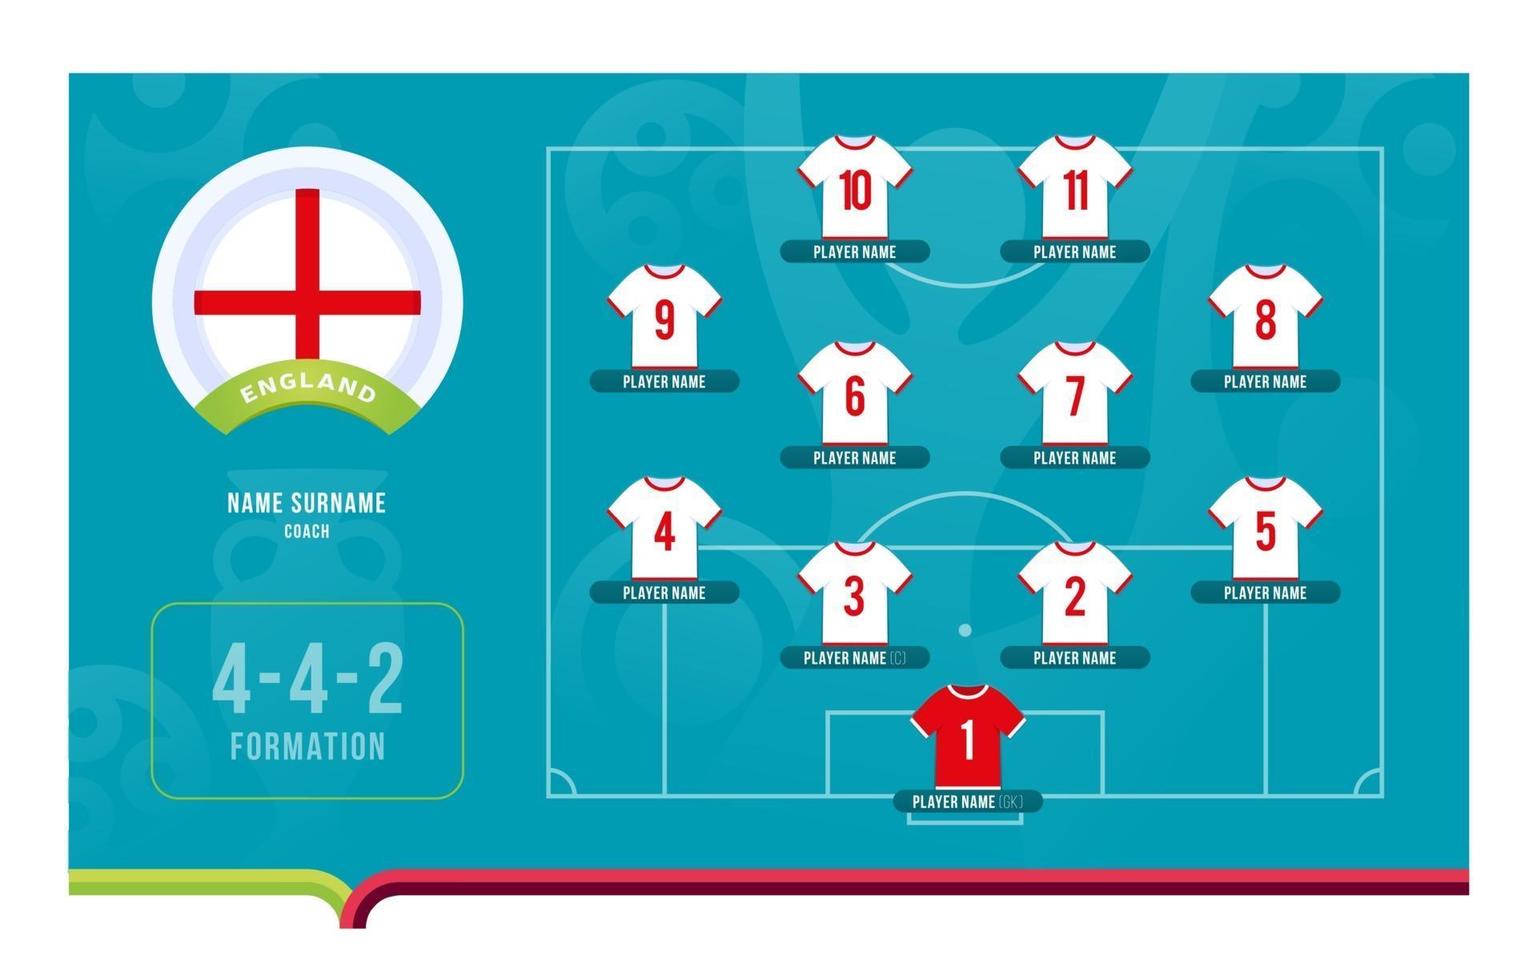 Engeland line-up voetbaltoernooi laatste fase vectorillustratie vector